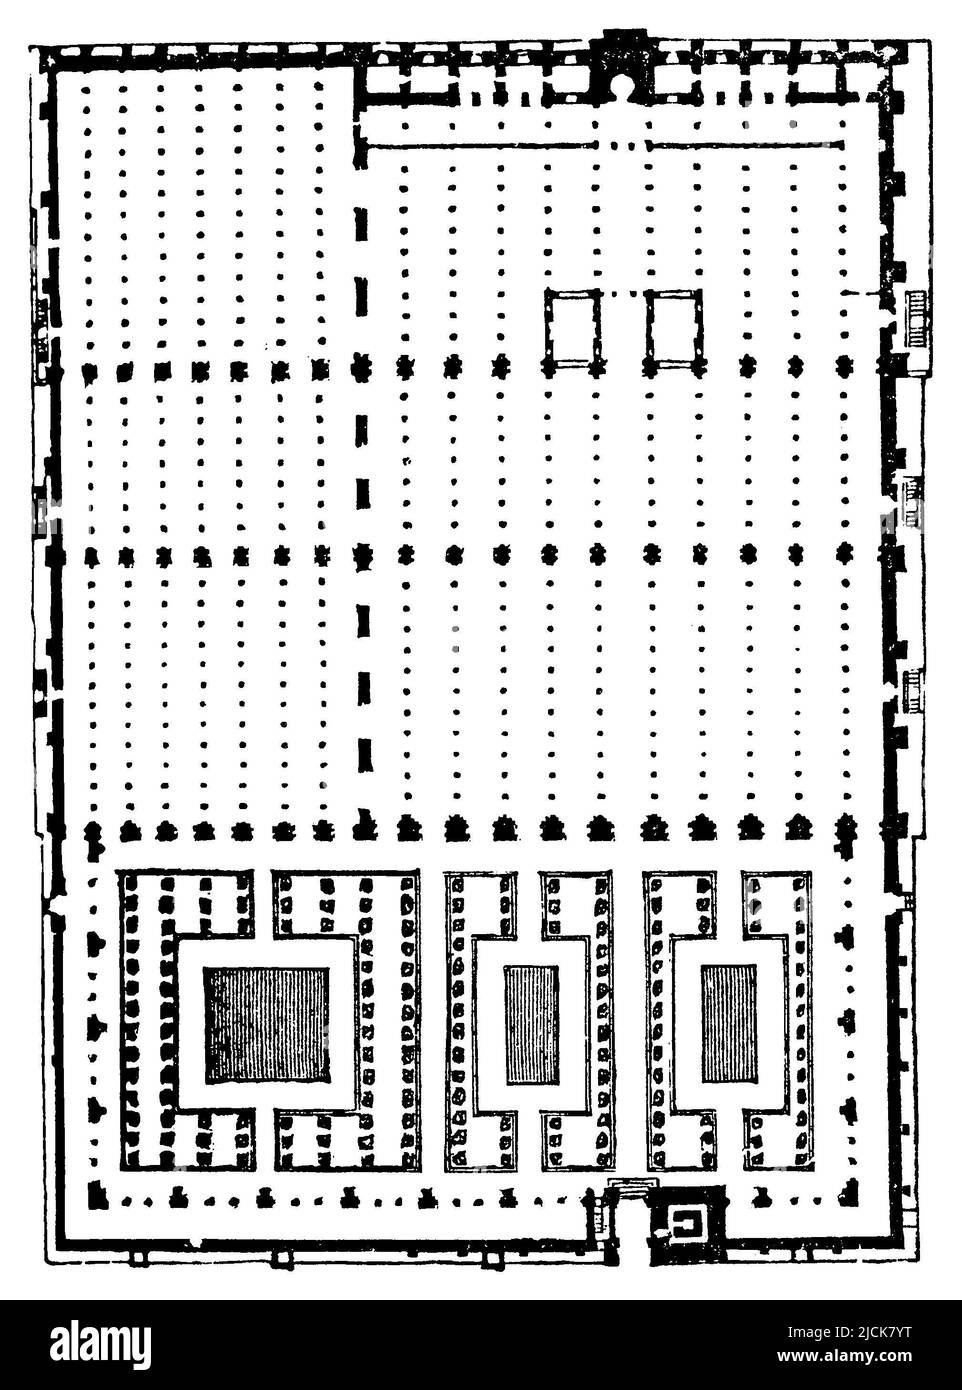 Mezquita Catedral, Spagna, piano, , (enciclopedia, 1898), Moschee von Cordoba, Spanien, Grundriss, Mosquée-cathédrale de Cordoue, Espagne, plan de base Foto Stock